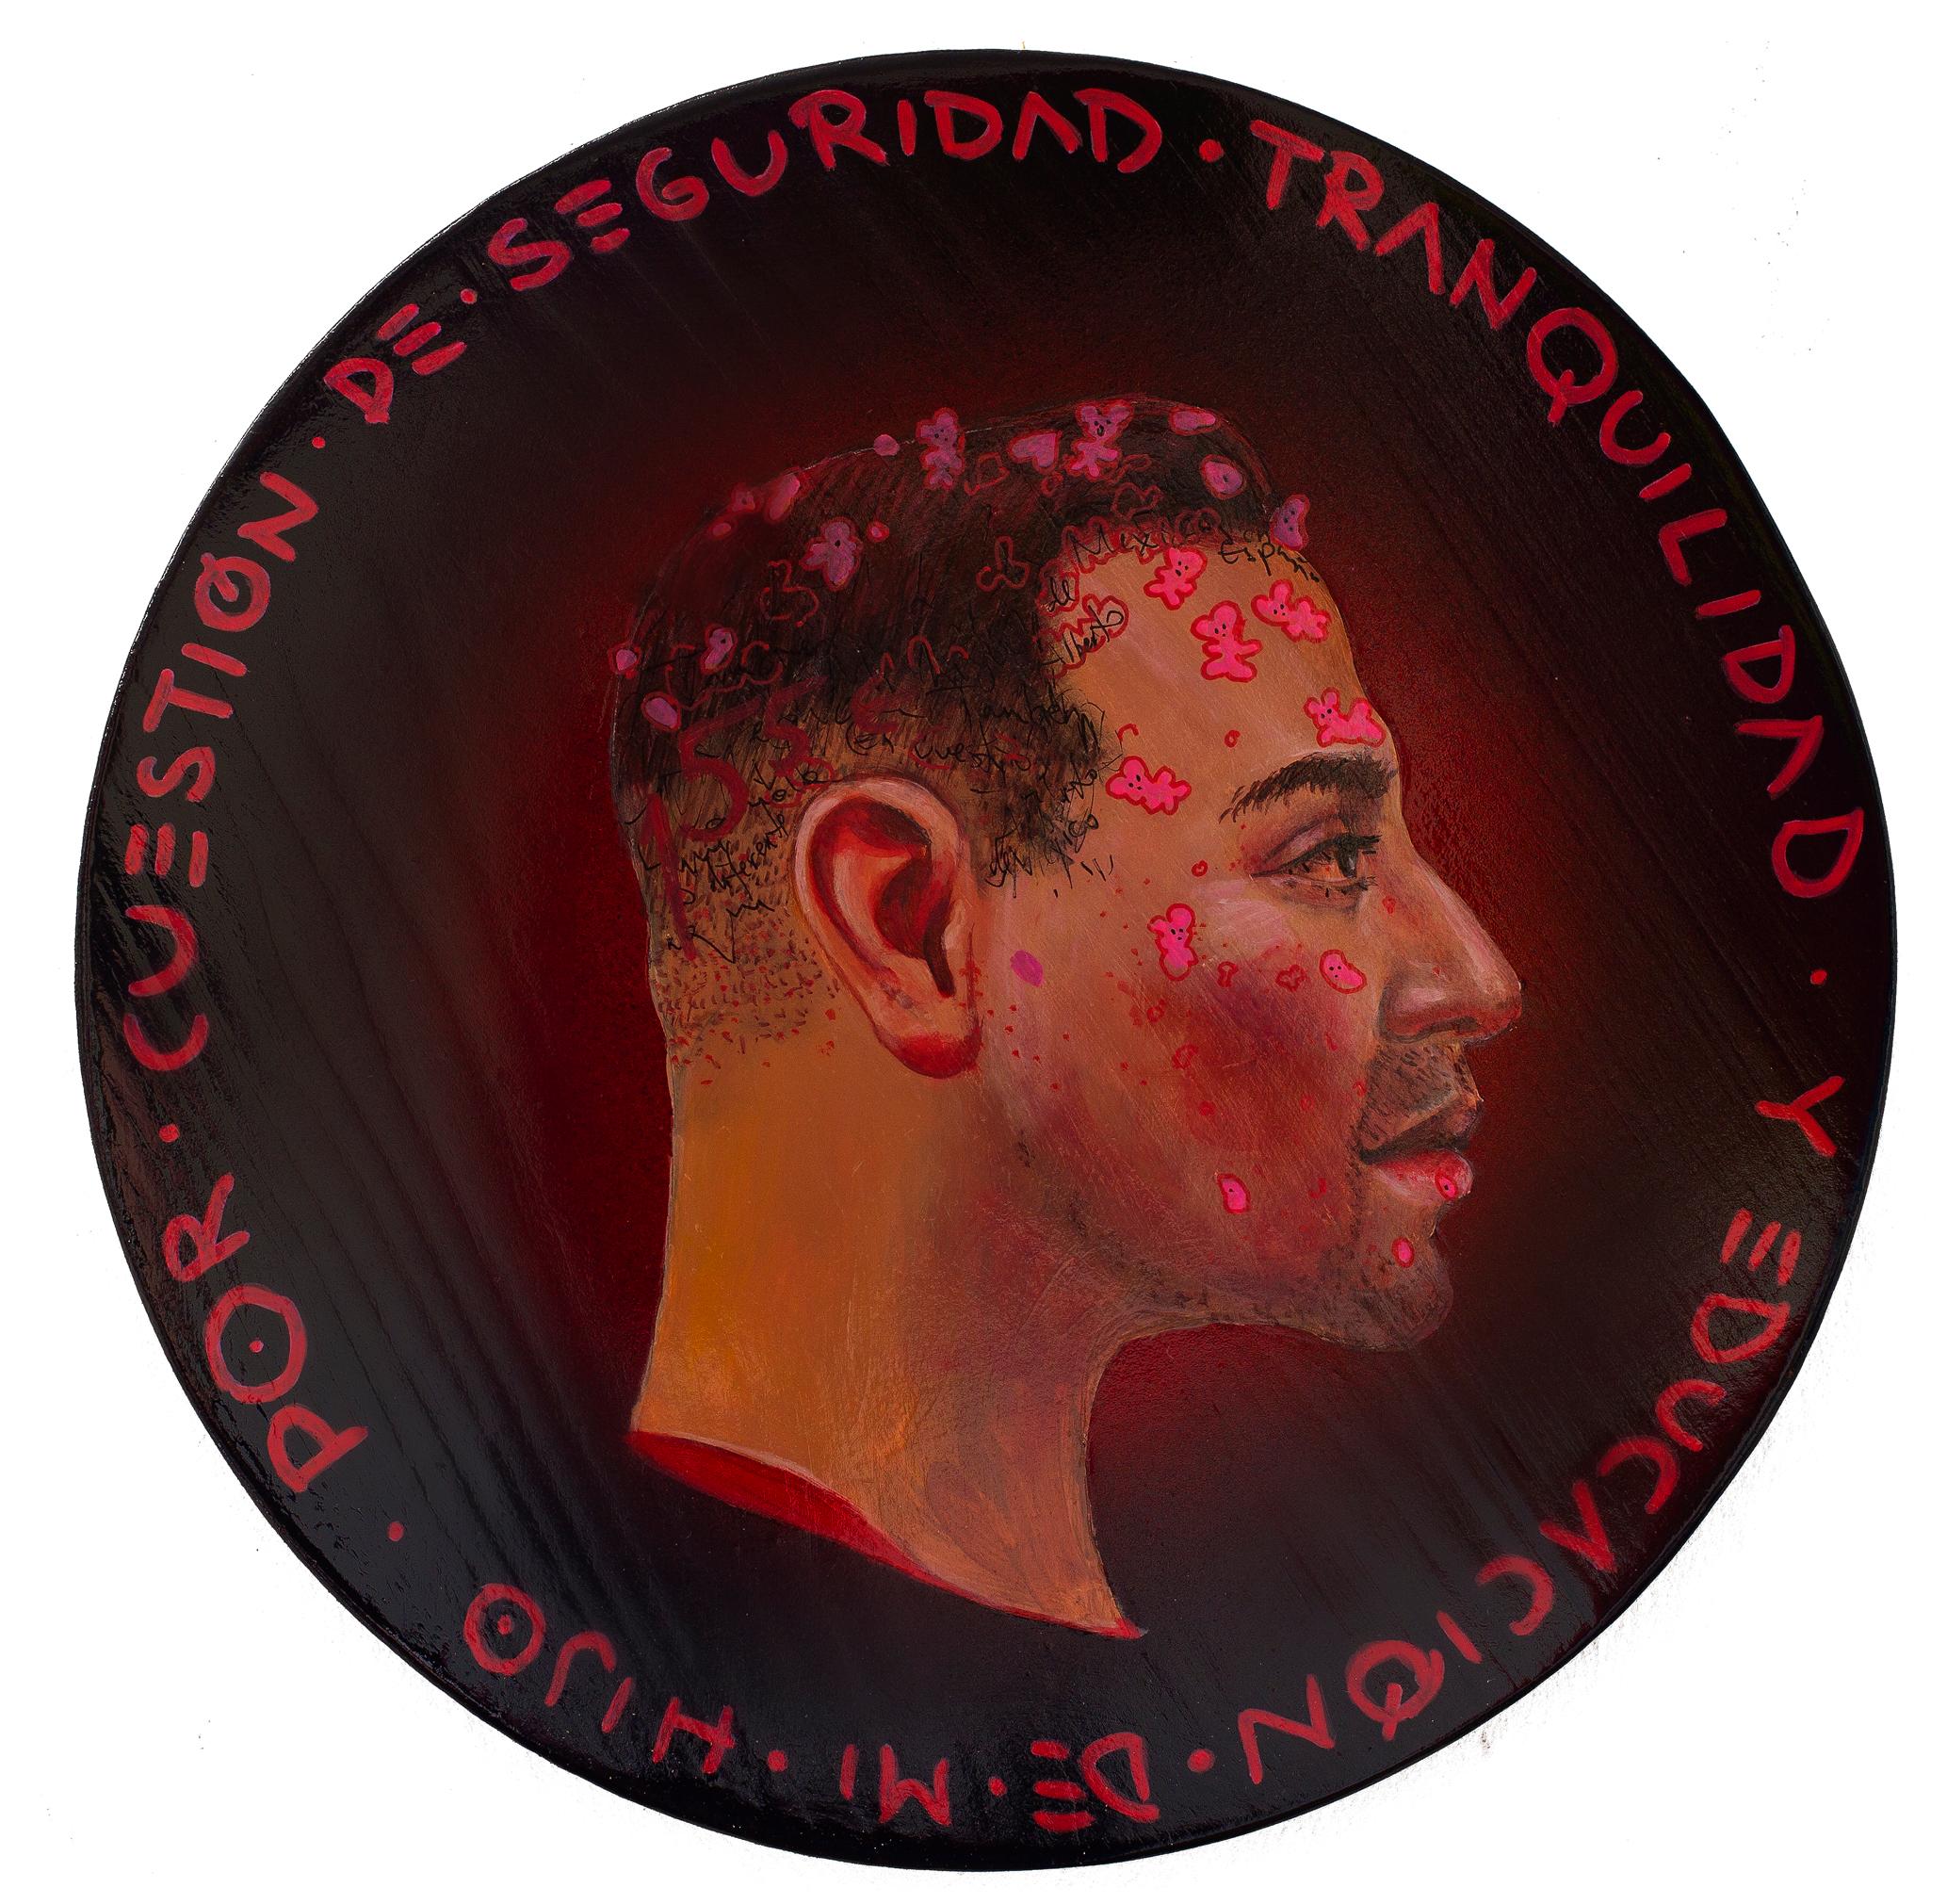 Black and red background. Latin Male Side Profile Portrait Currency #187 - Mixed Media Art by Natasha Lelenco